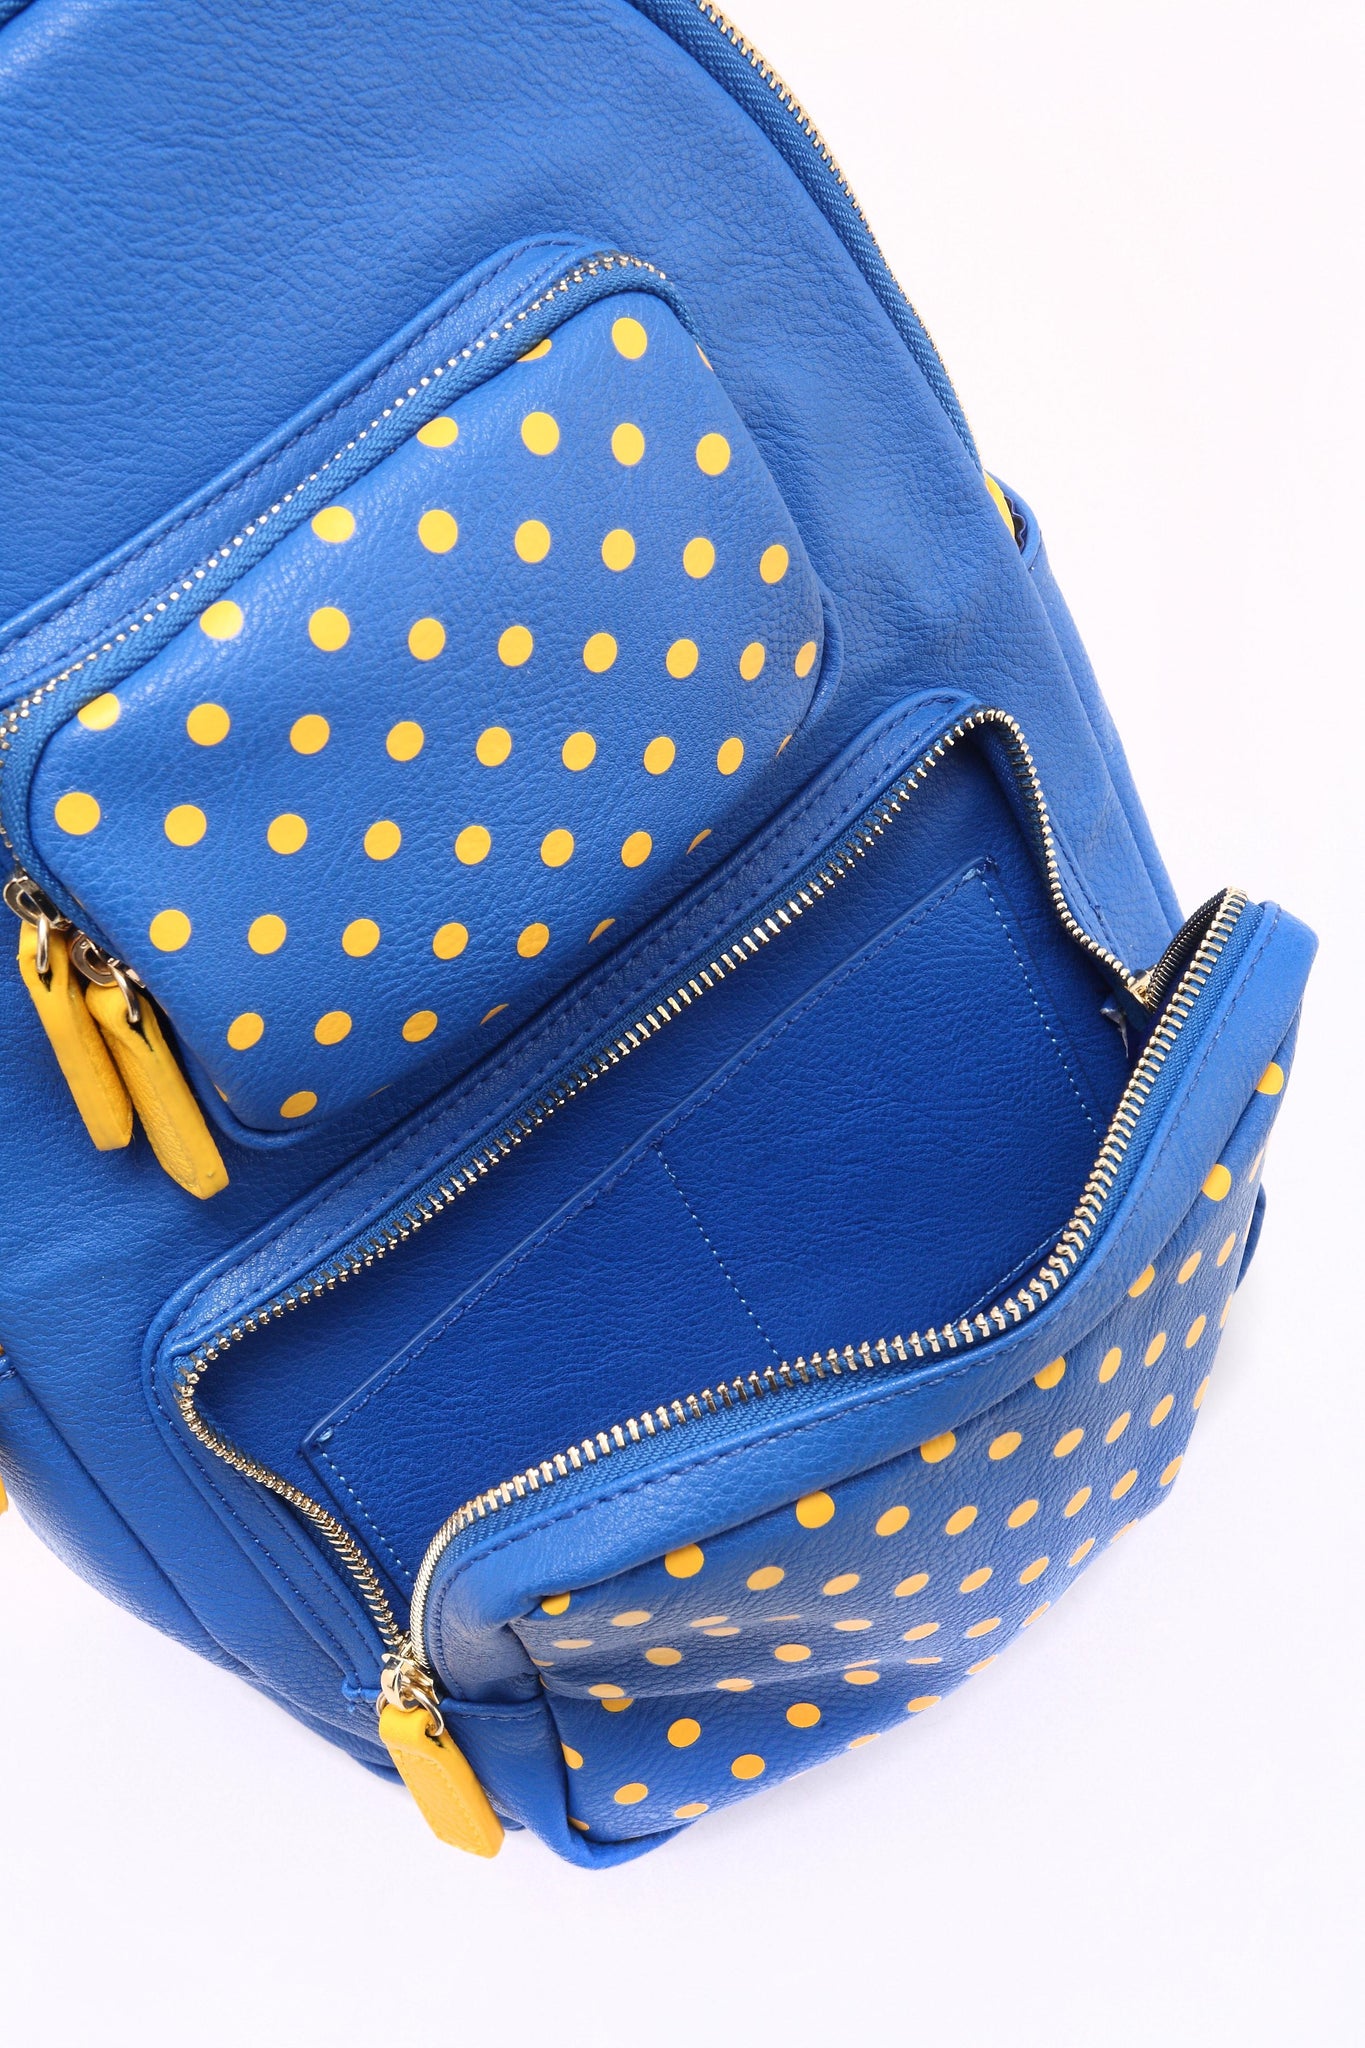 SCORE! The Official Game Day Bag SCORE! Natalie Michelle Medium Polka Dot Designer  Backpack - Red and